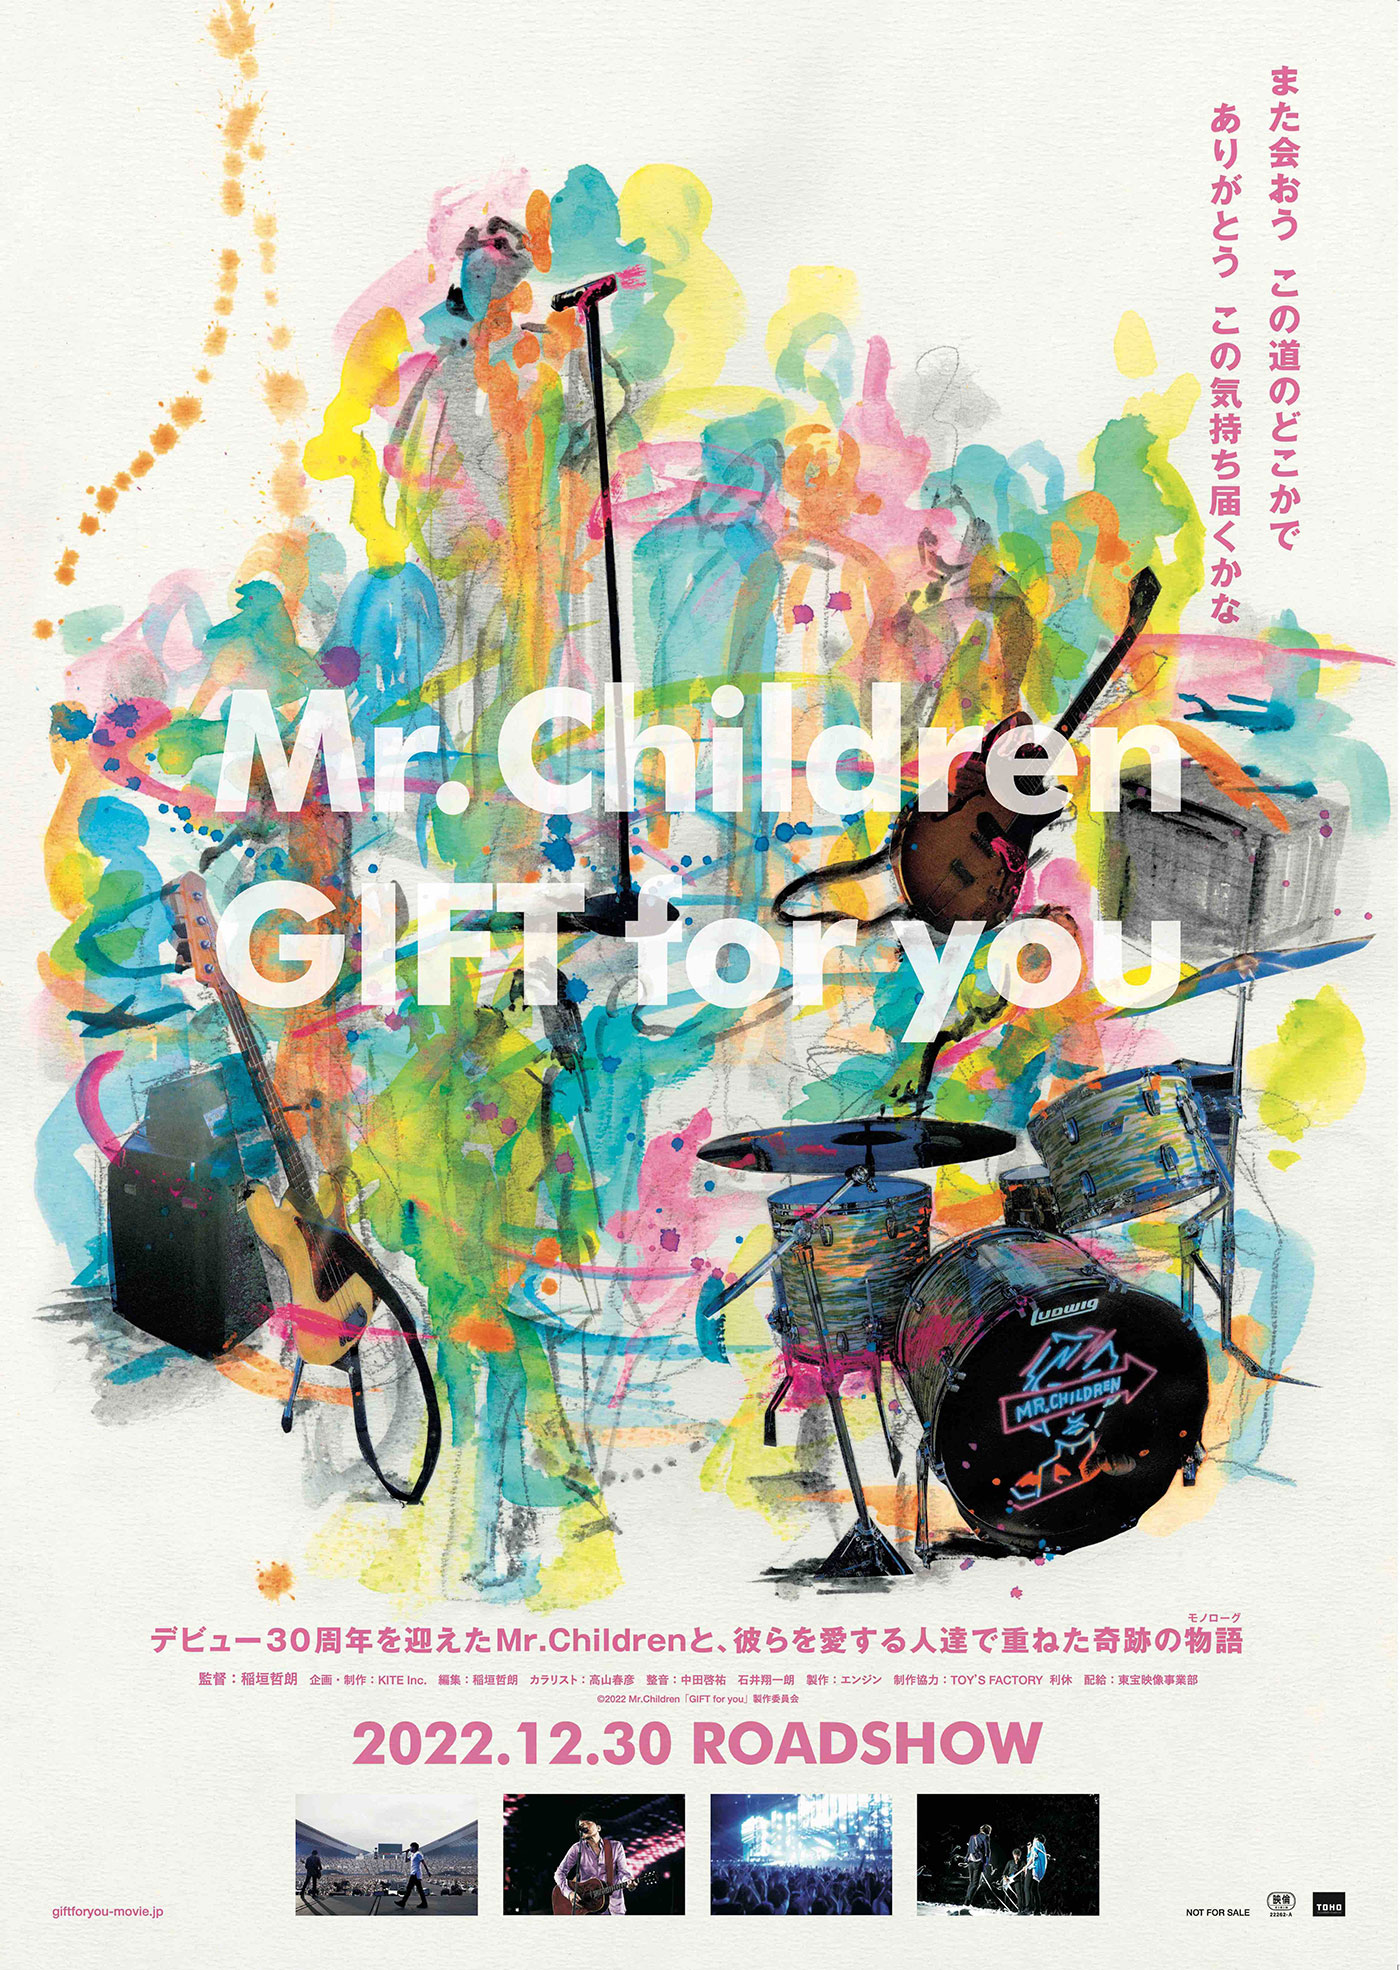 Mr.Children「君と重ねたモノローグ」の楽曲にのせた映画『GIFT for you』新規映像が公開 - 画像一覧（1/3）